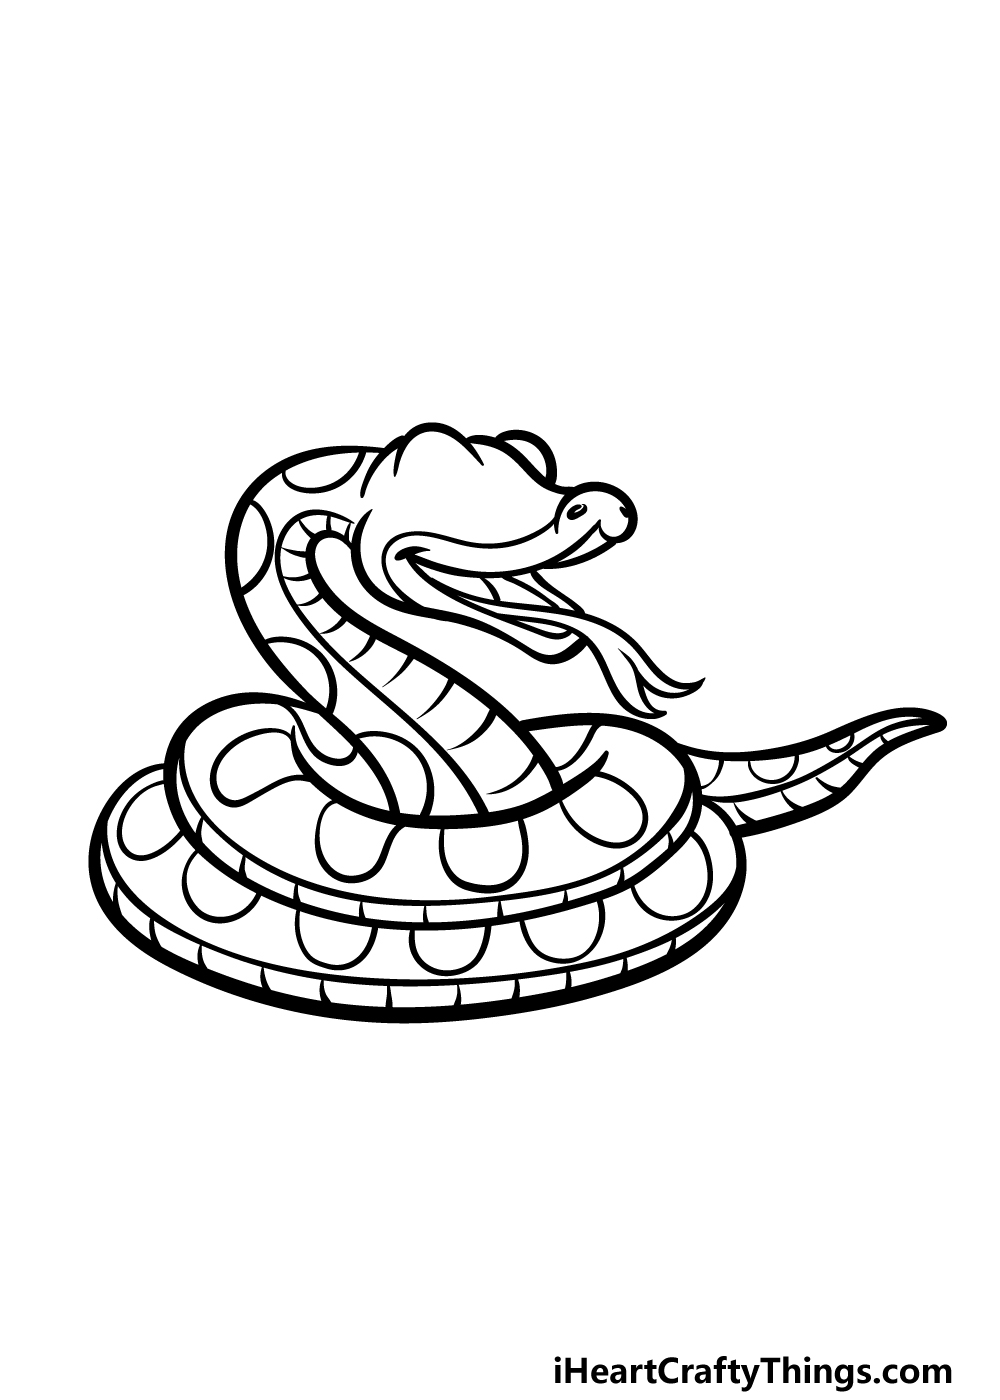 how to draw a cartoon snake step 4